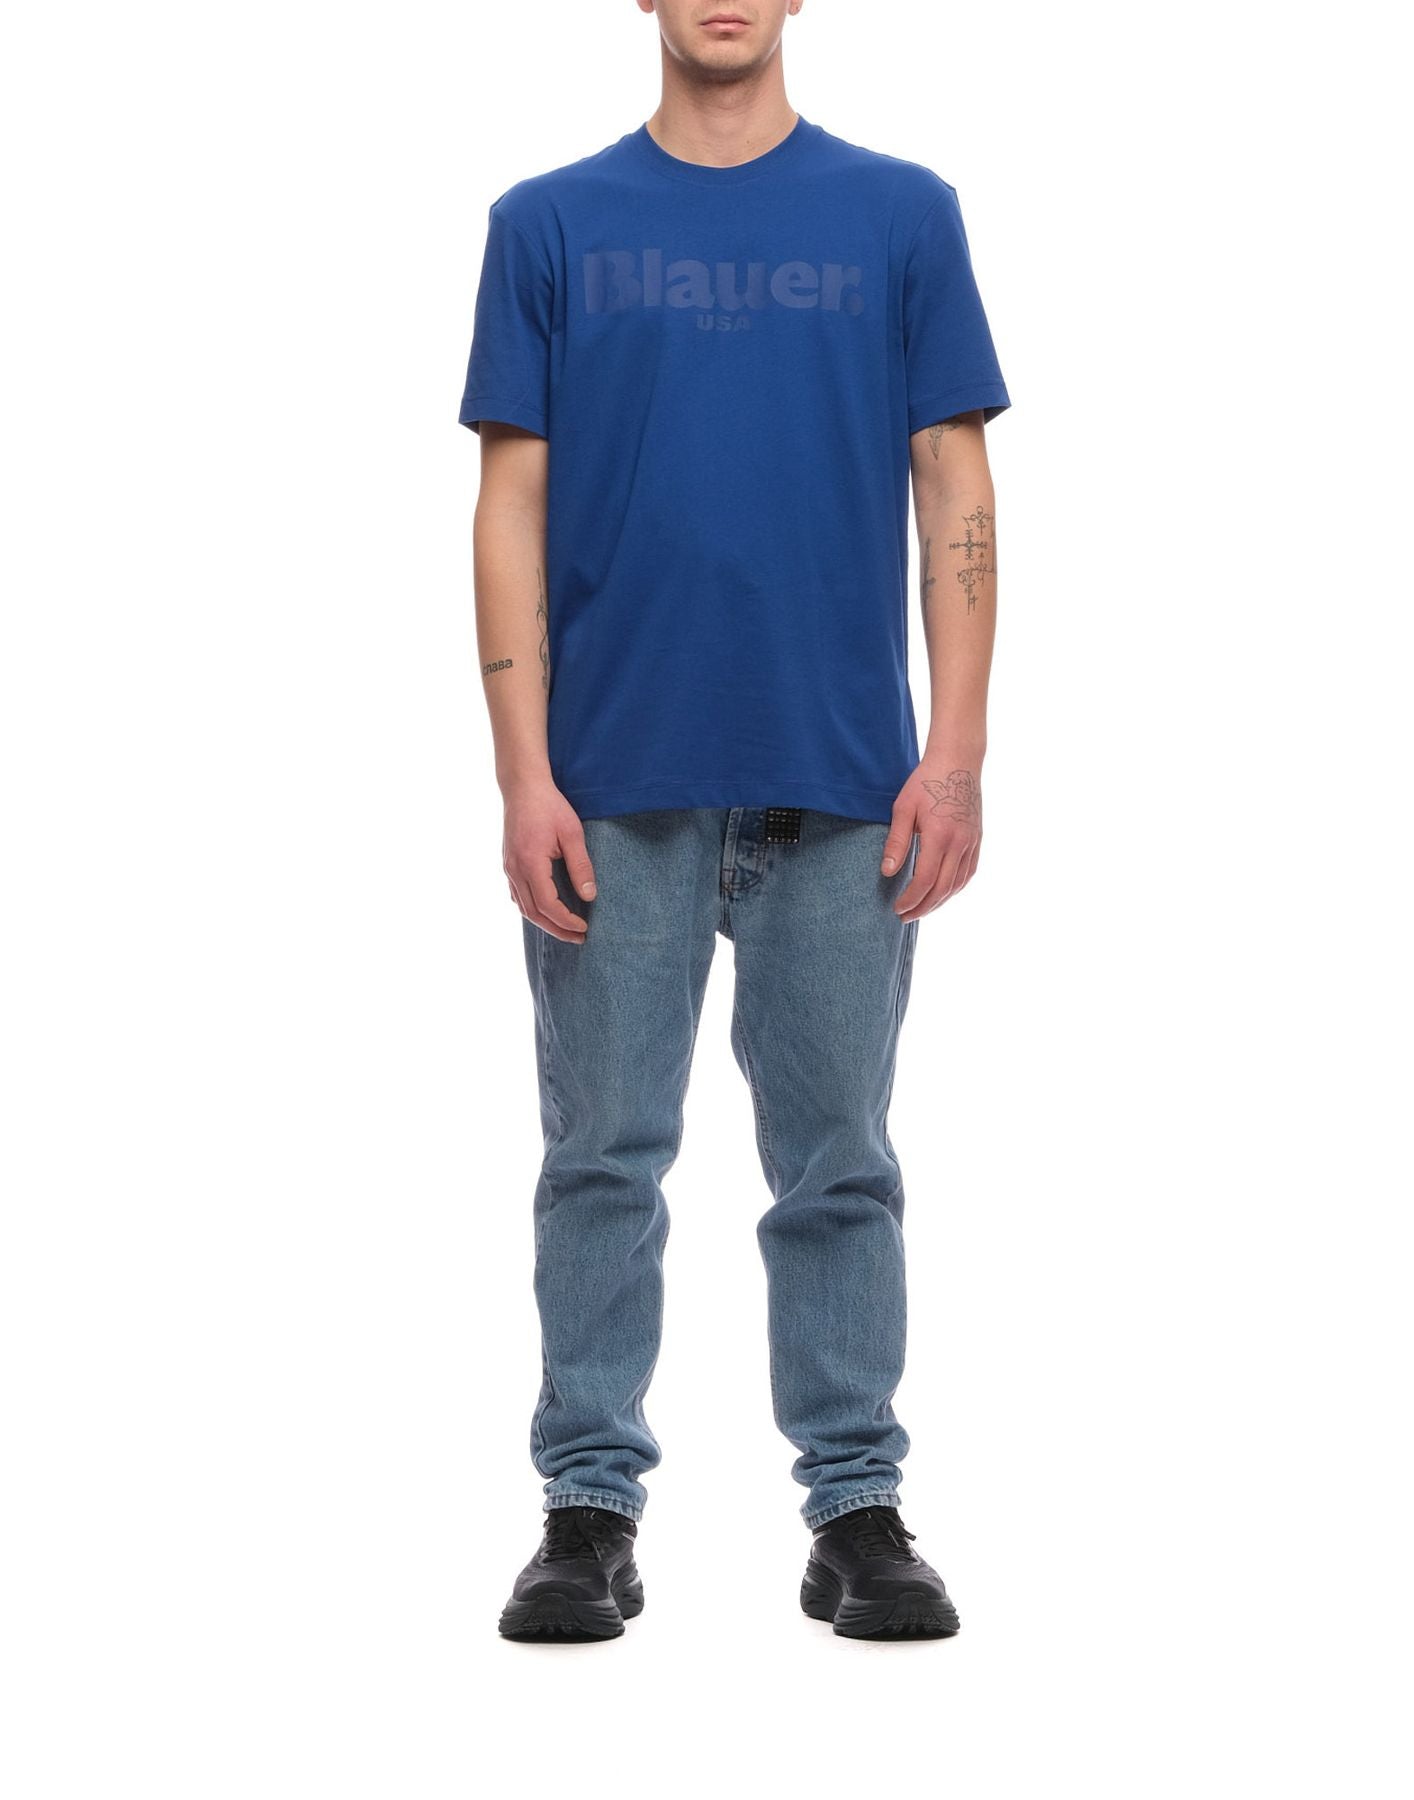 T-shirt da uomo BLUH02094 004547 772 Blauer